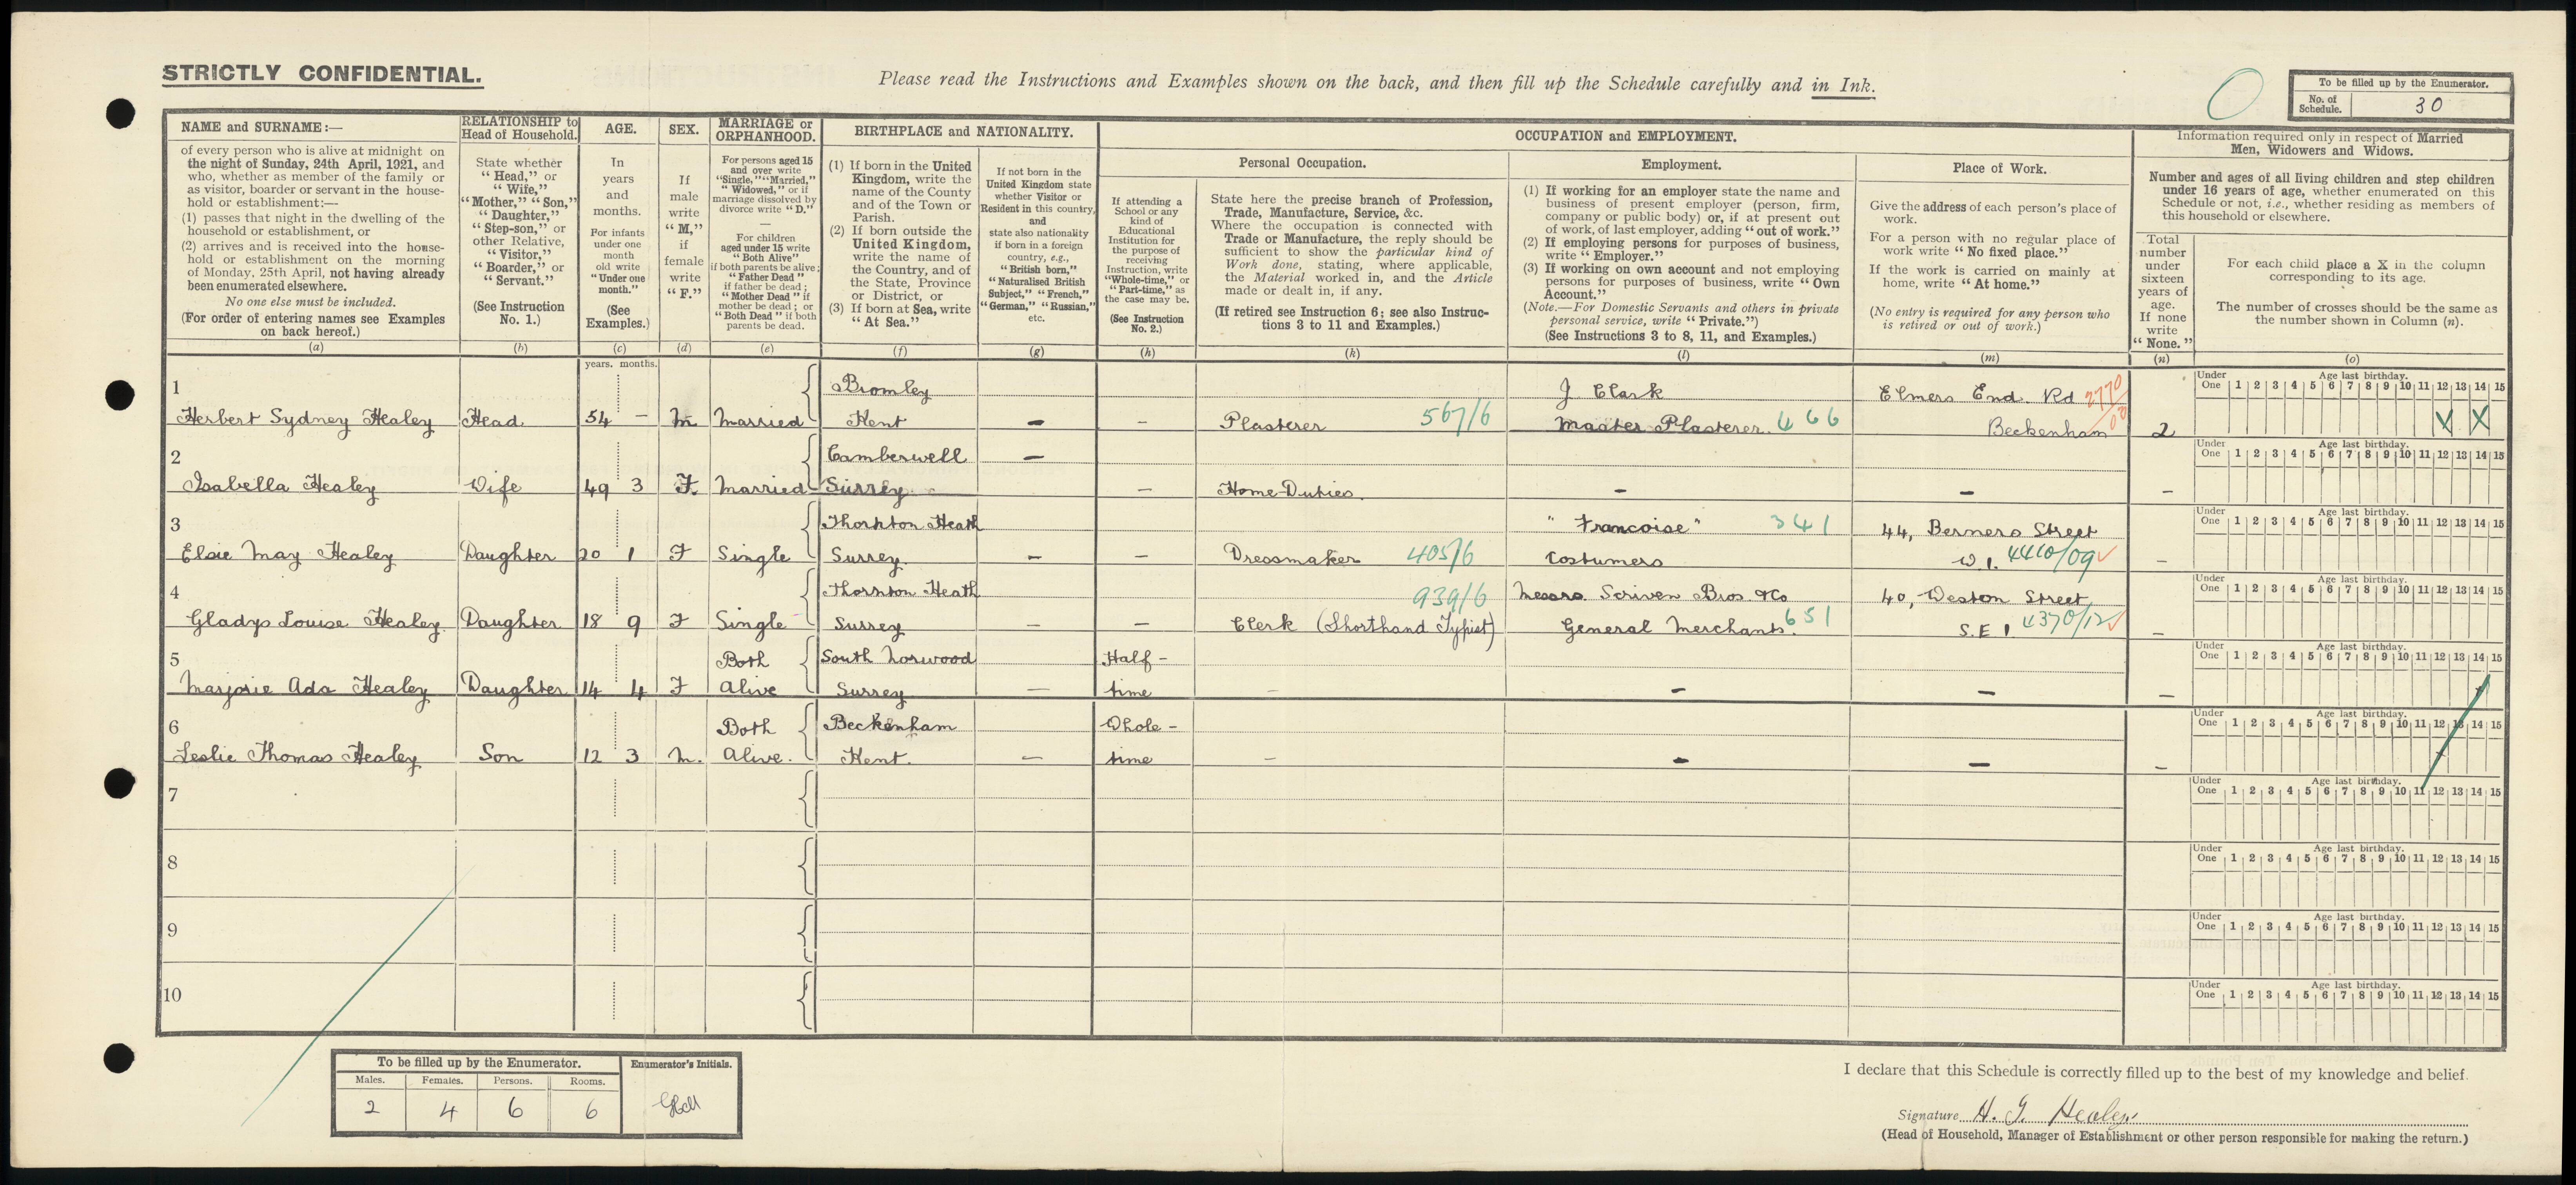 Leslie Thomas Healey 1921 Census